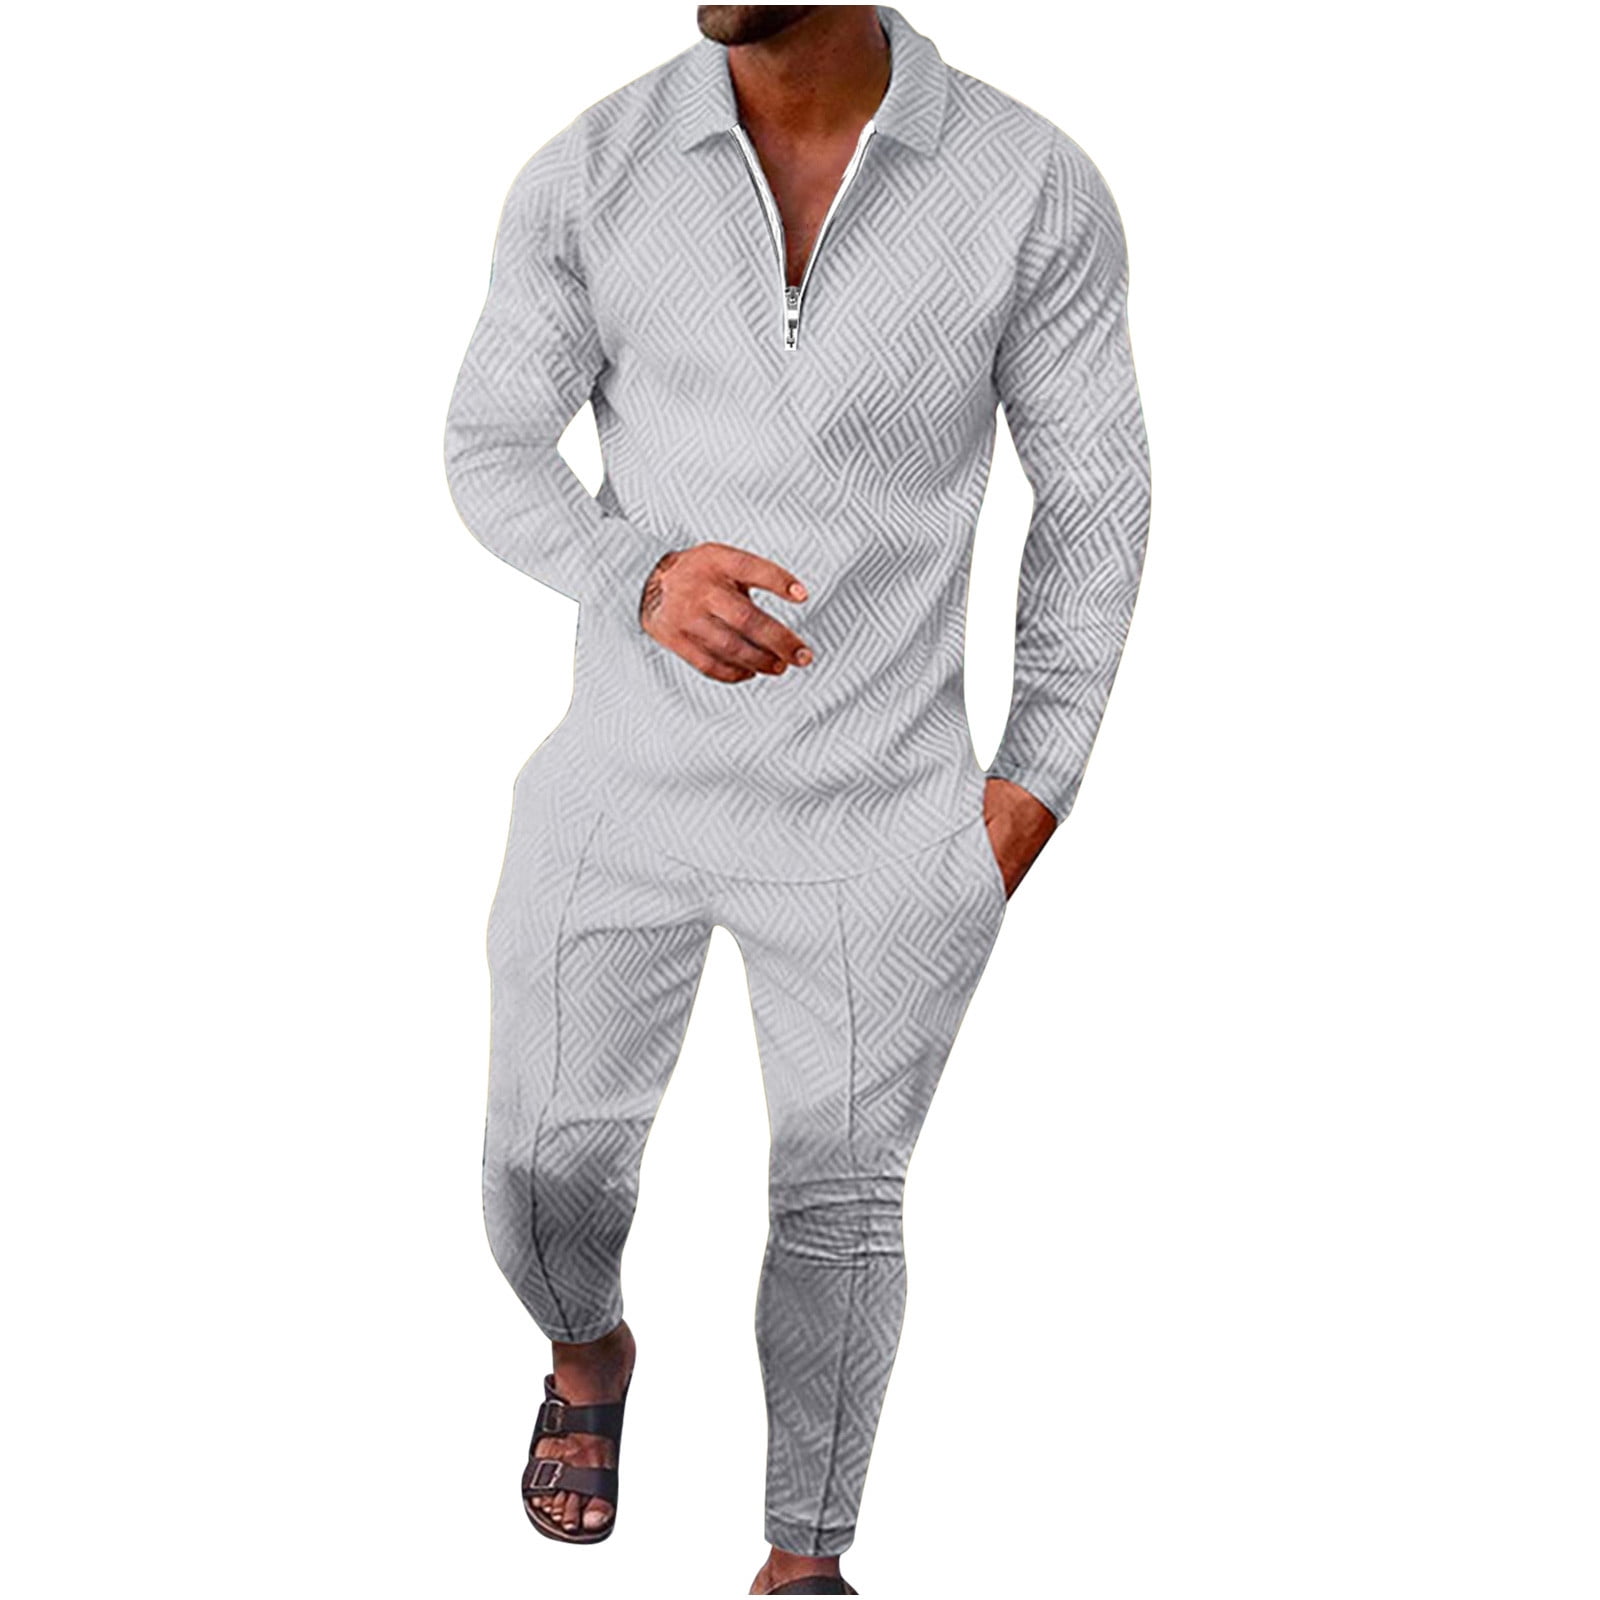 Hfyihgf Mens Long Sleeve Casual Polo Shirt and Sweatpant Sets 2